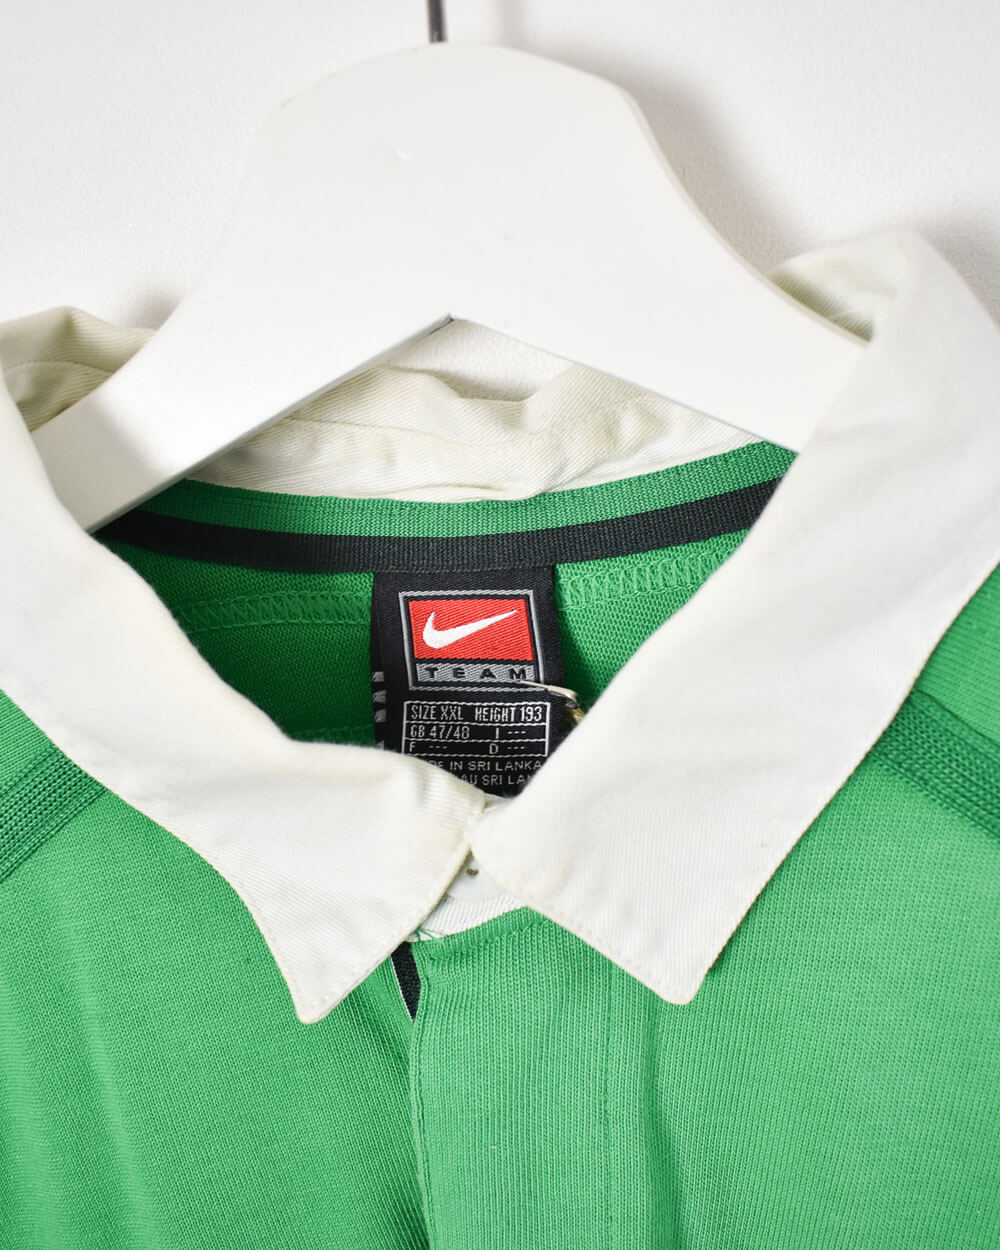 Green Nike Team Ireland Rugby Shirt -  XX-Large